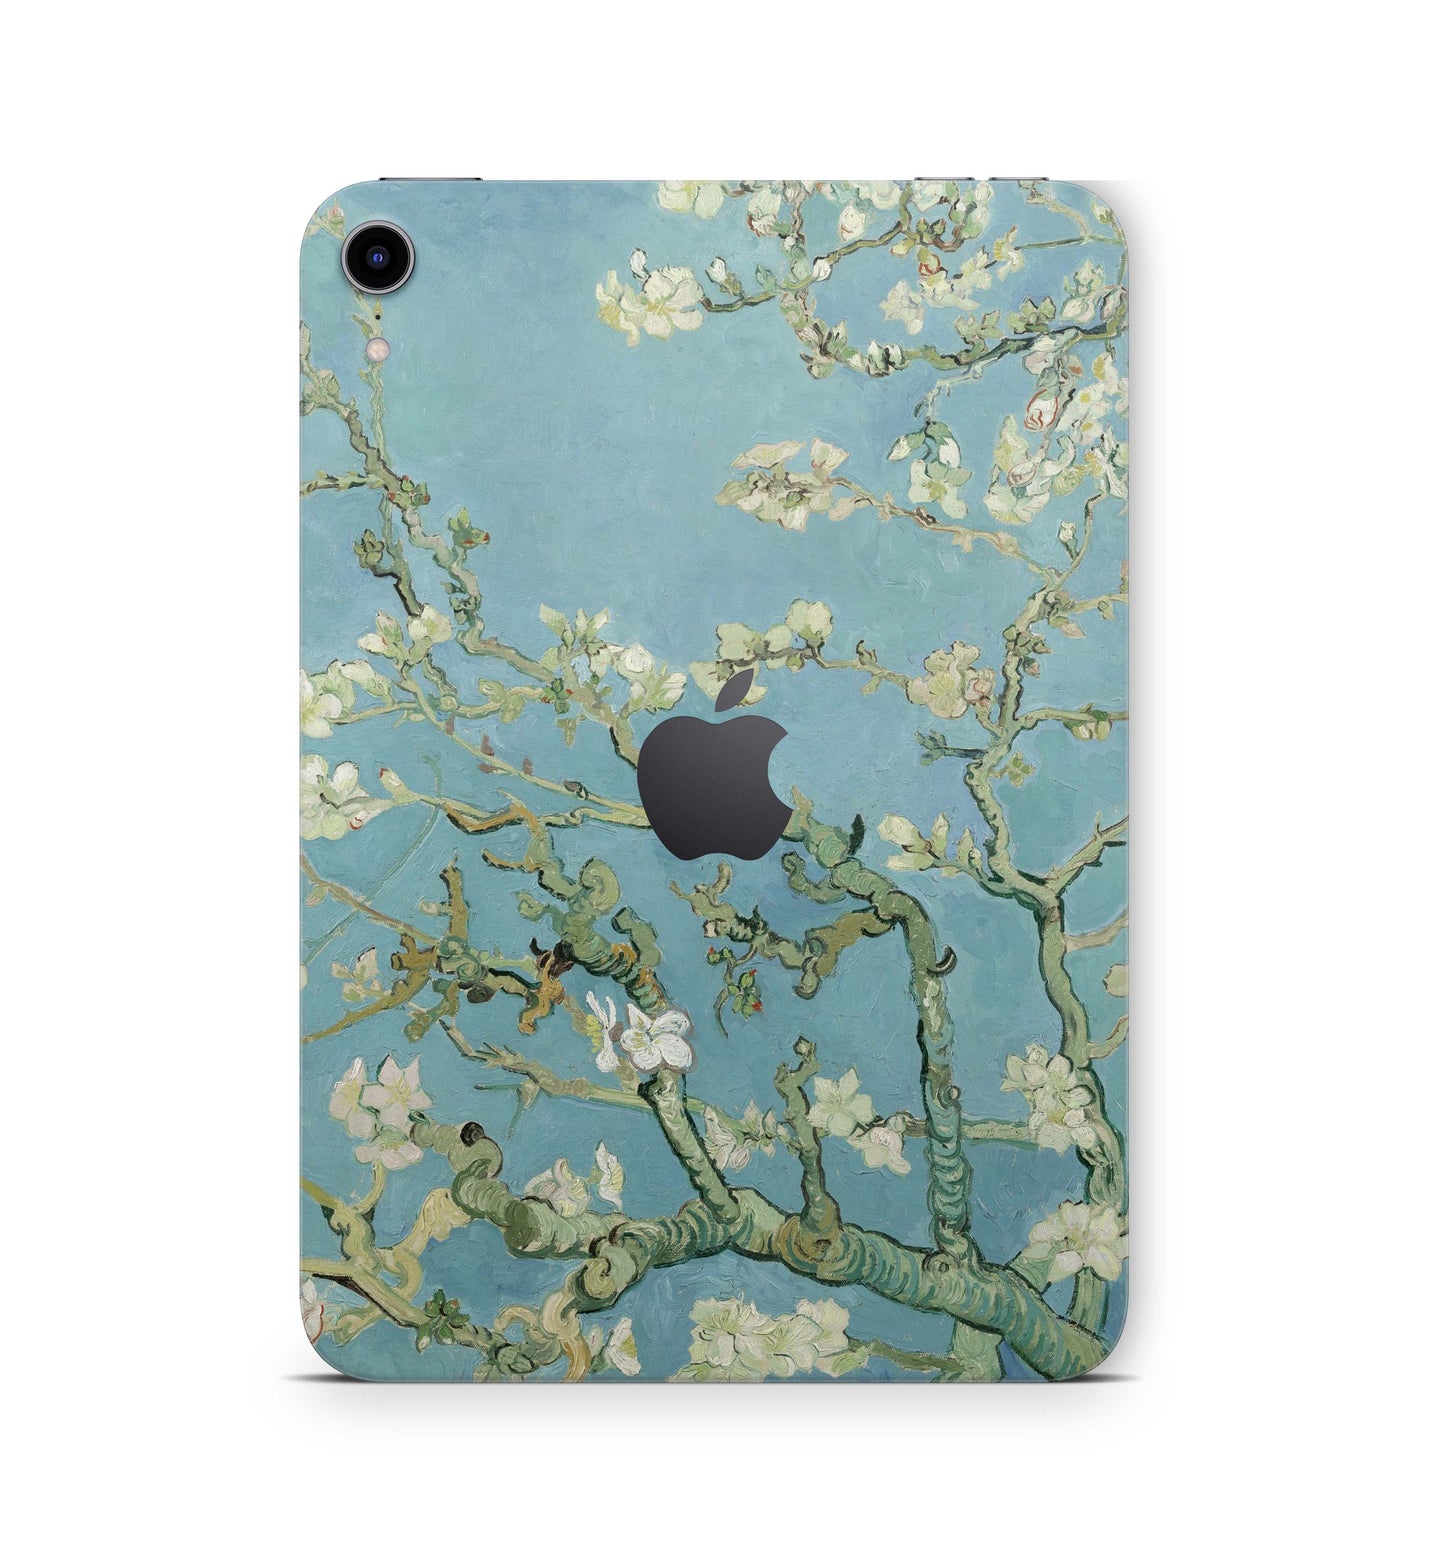 iPad Air Skin Design Cover Folie Vinyl Skins & Wraps für alle iPad Air Modelle Aufkleber Skins4u Blossoming  